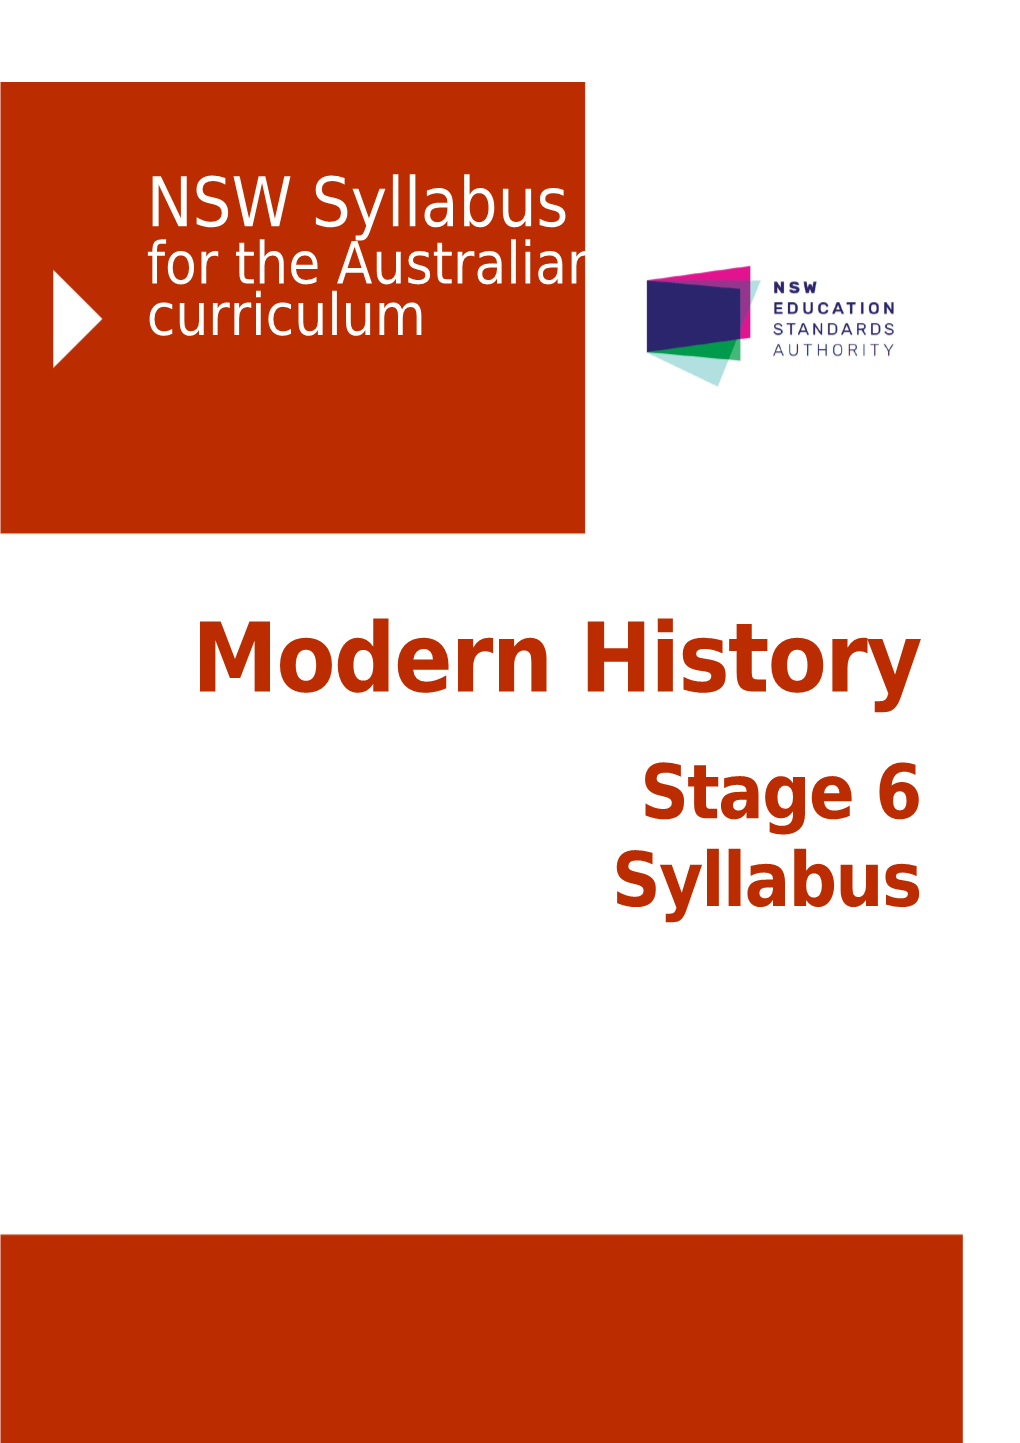 Modern History Stage 6 Syllabus 2017